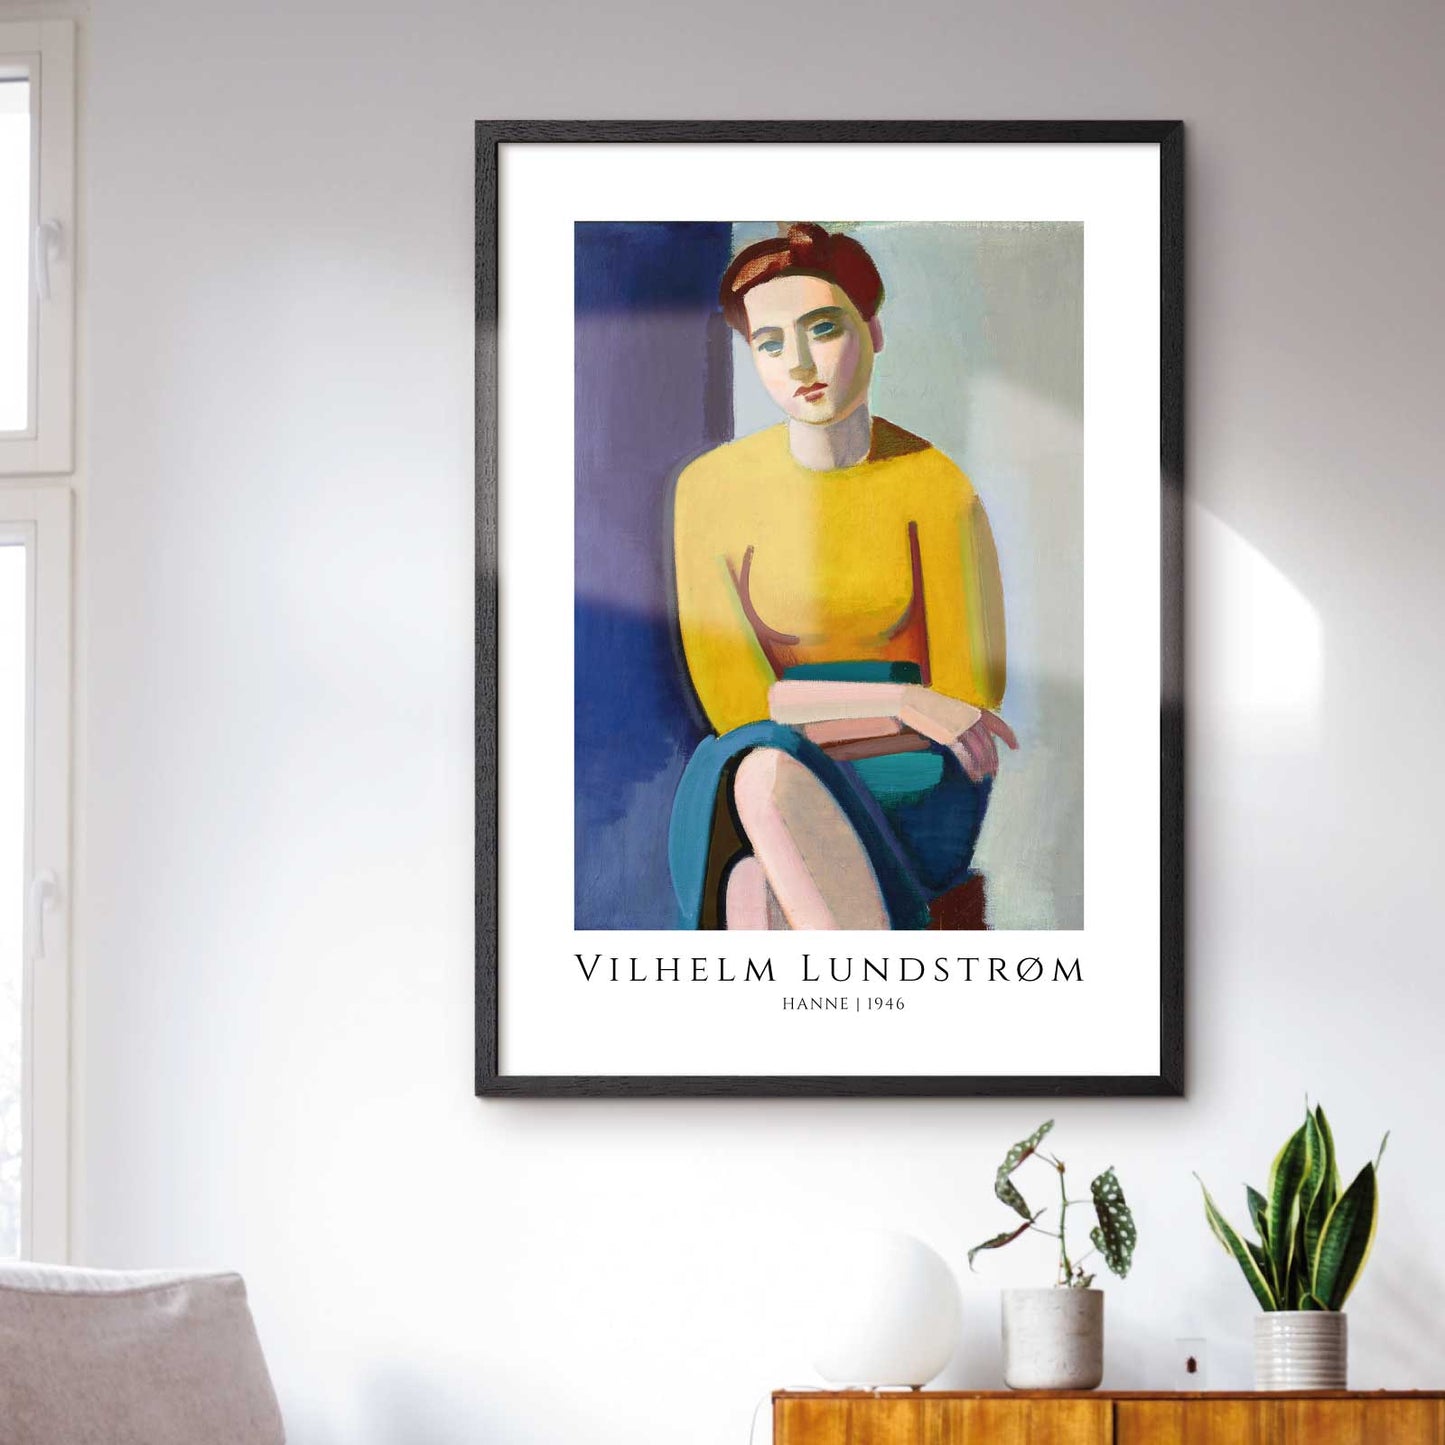 art poster with "Portrait of Hanne" by Vilhelm Lundstrøm